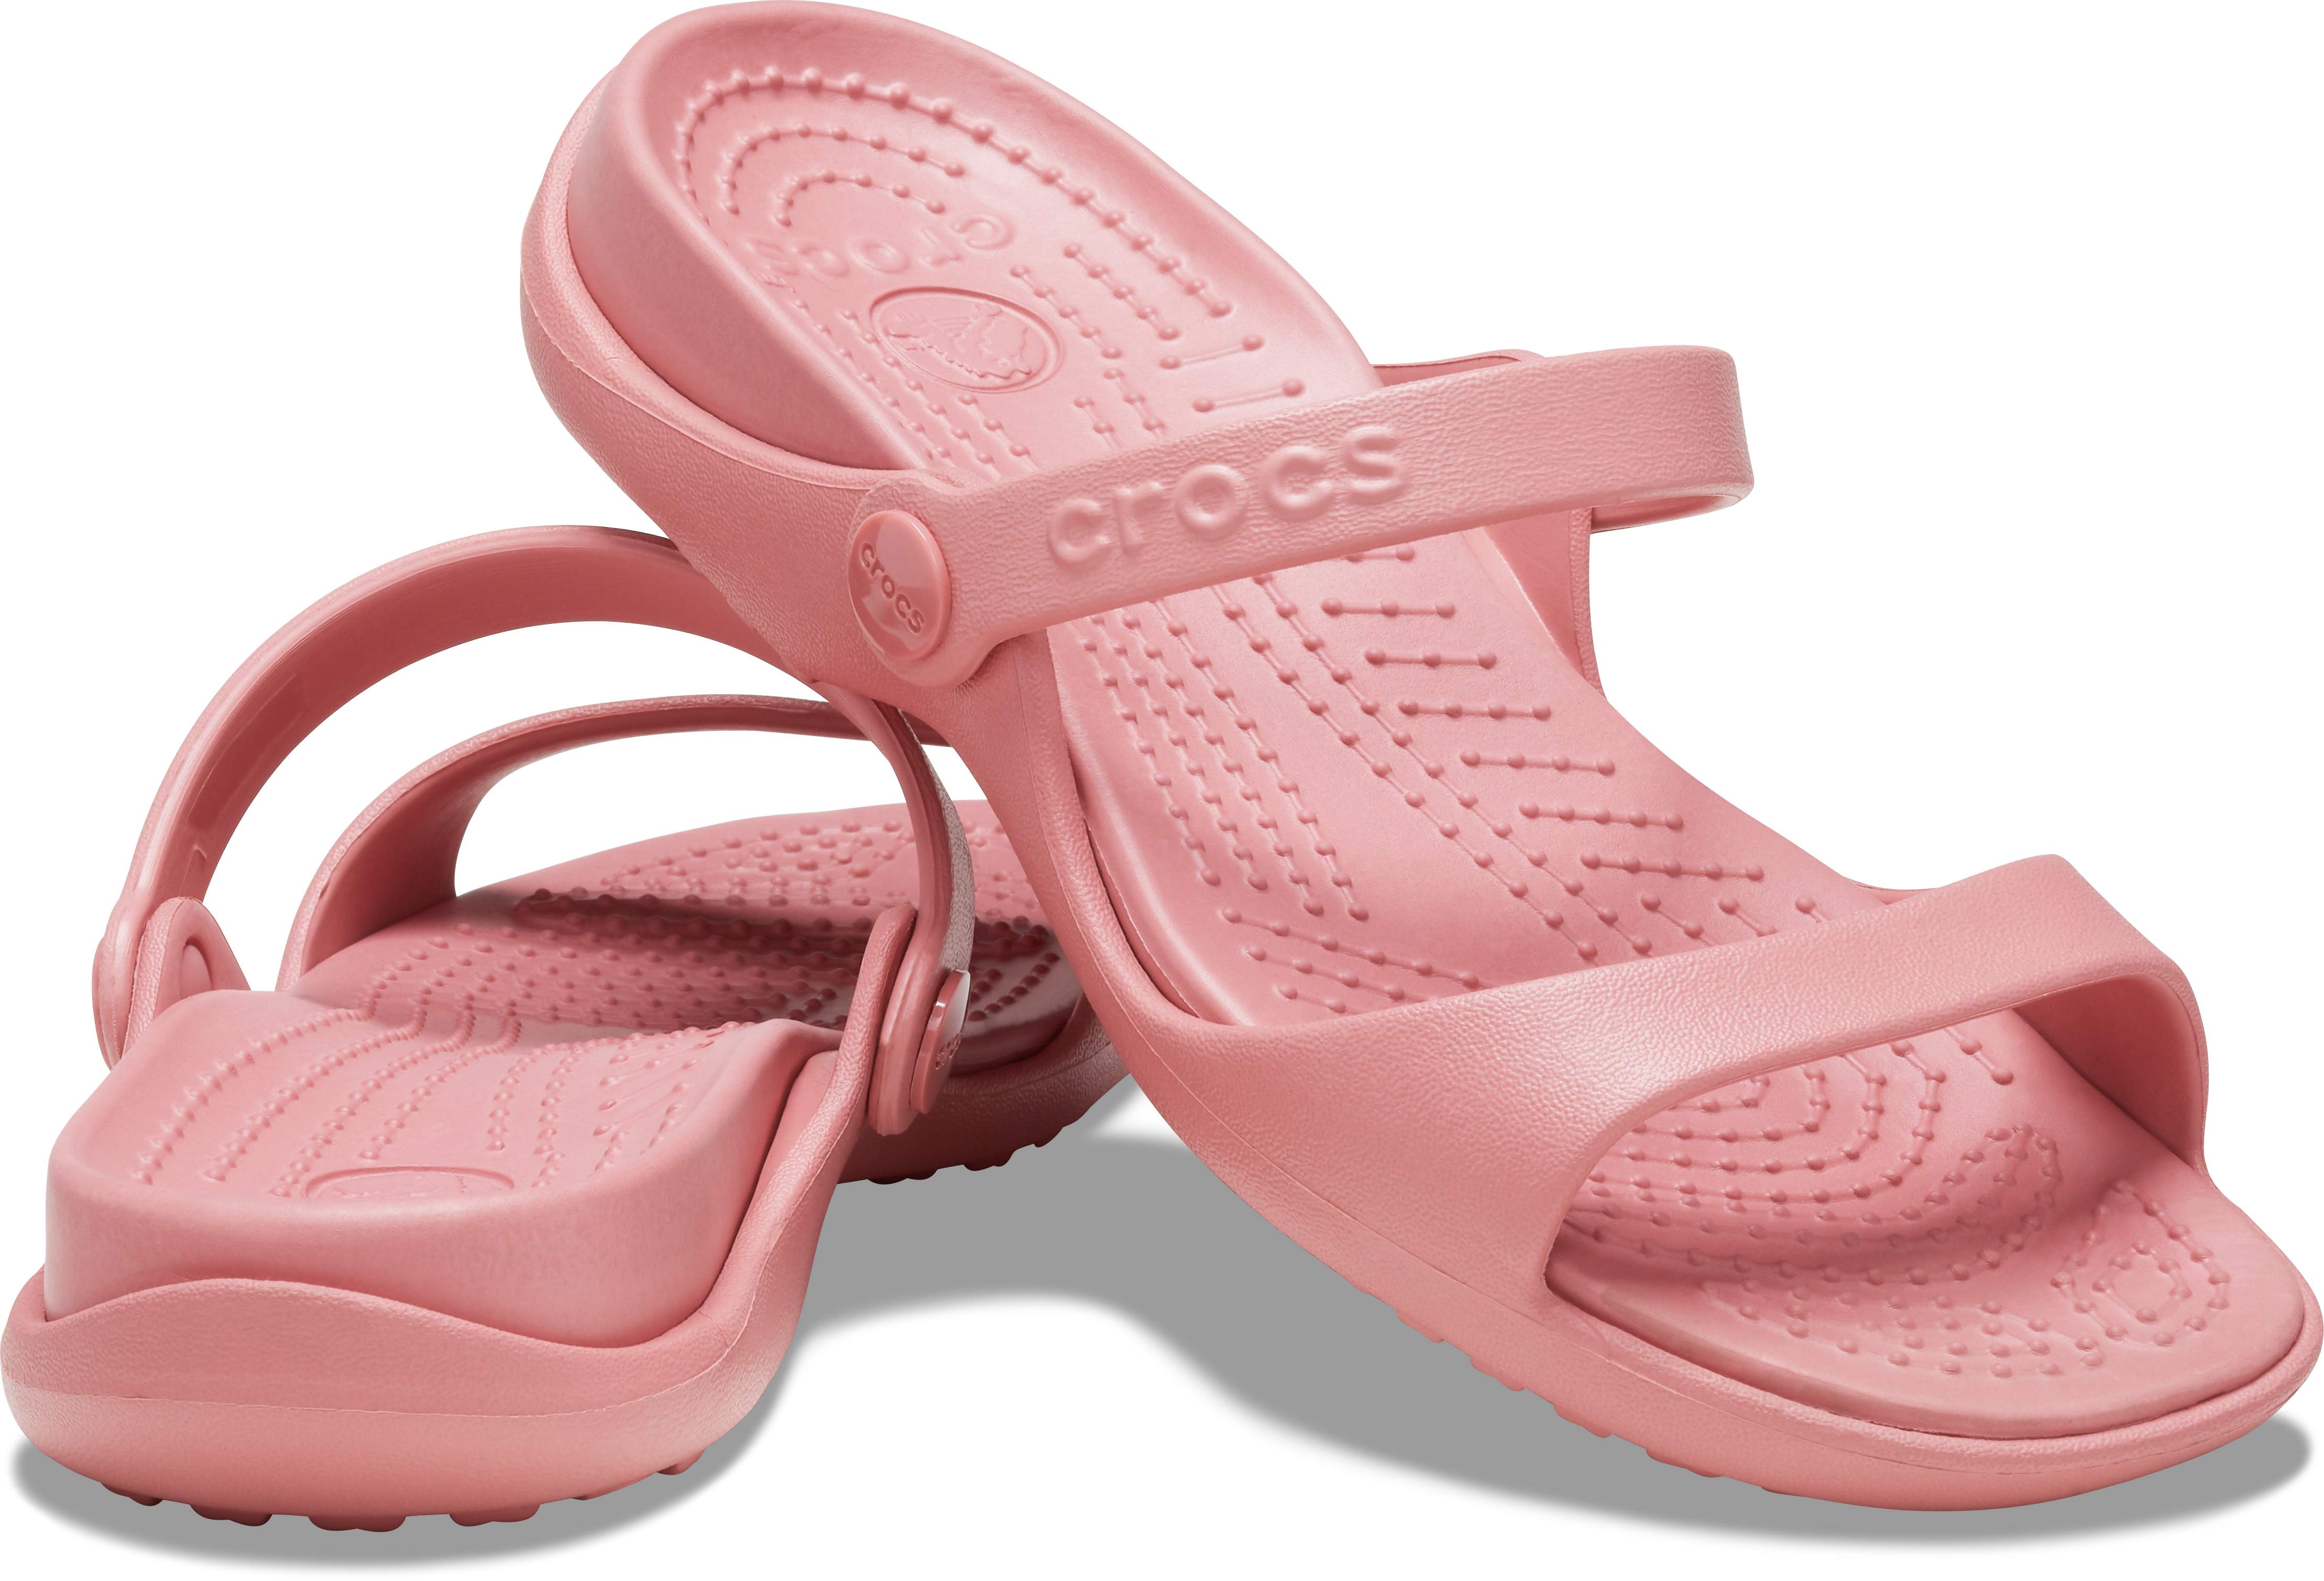 crocs women's cleo fashion sandals